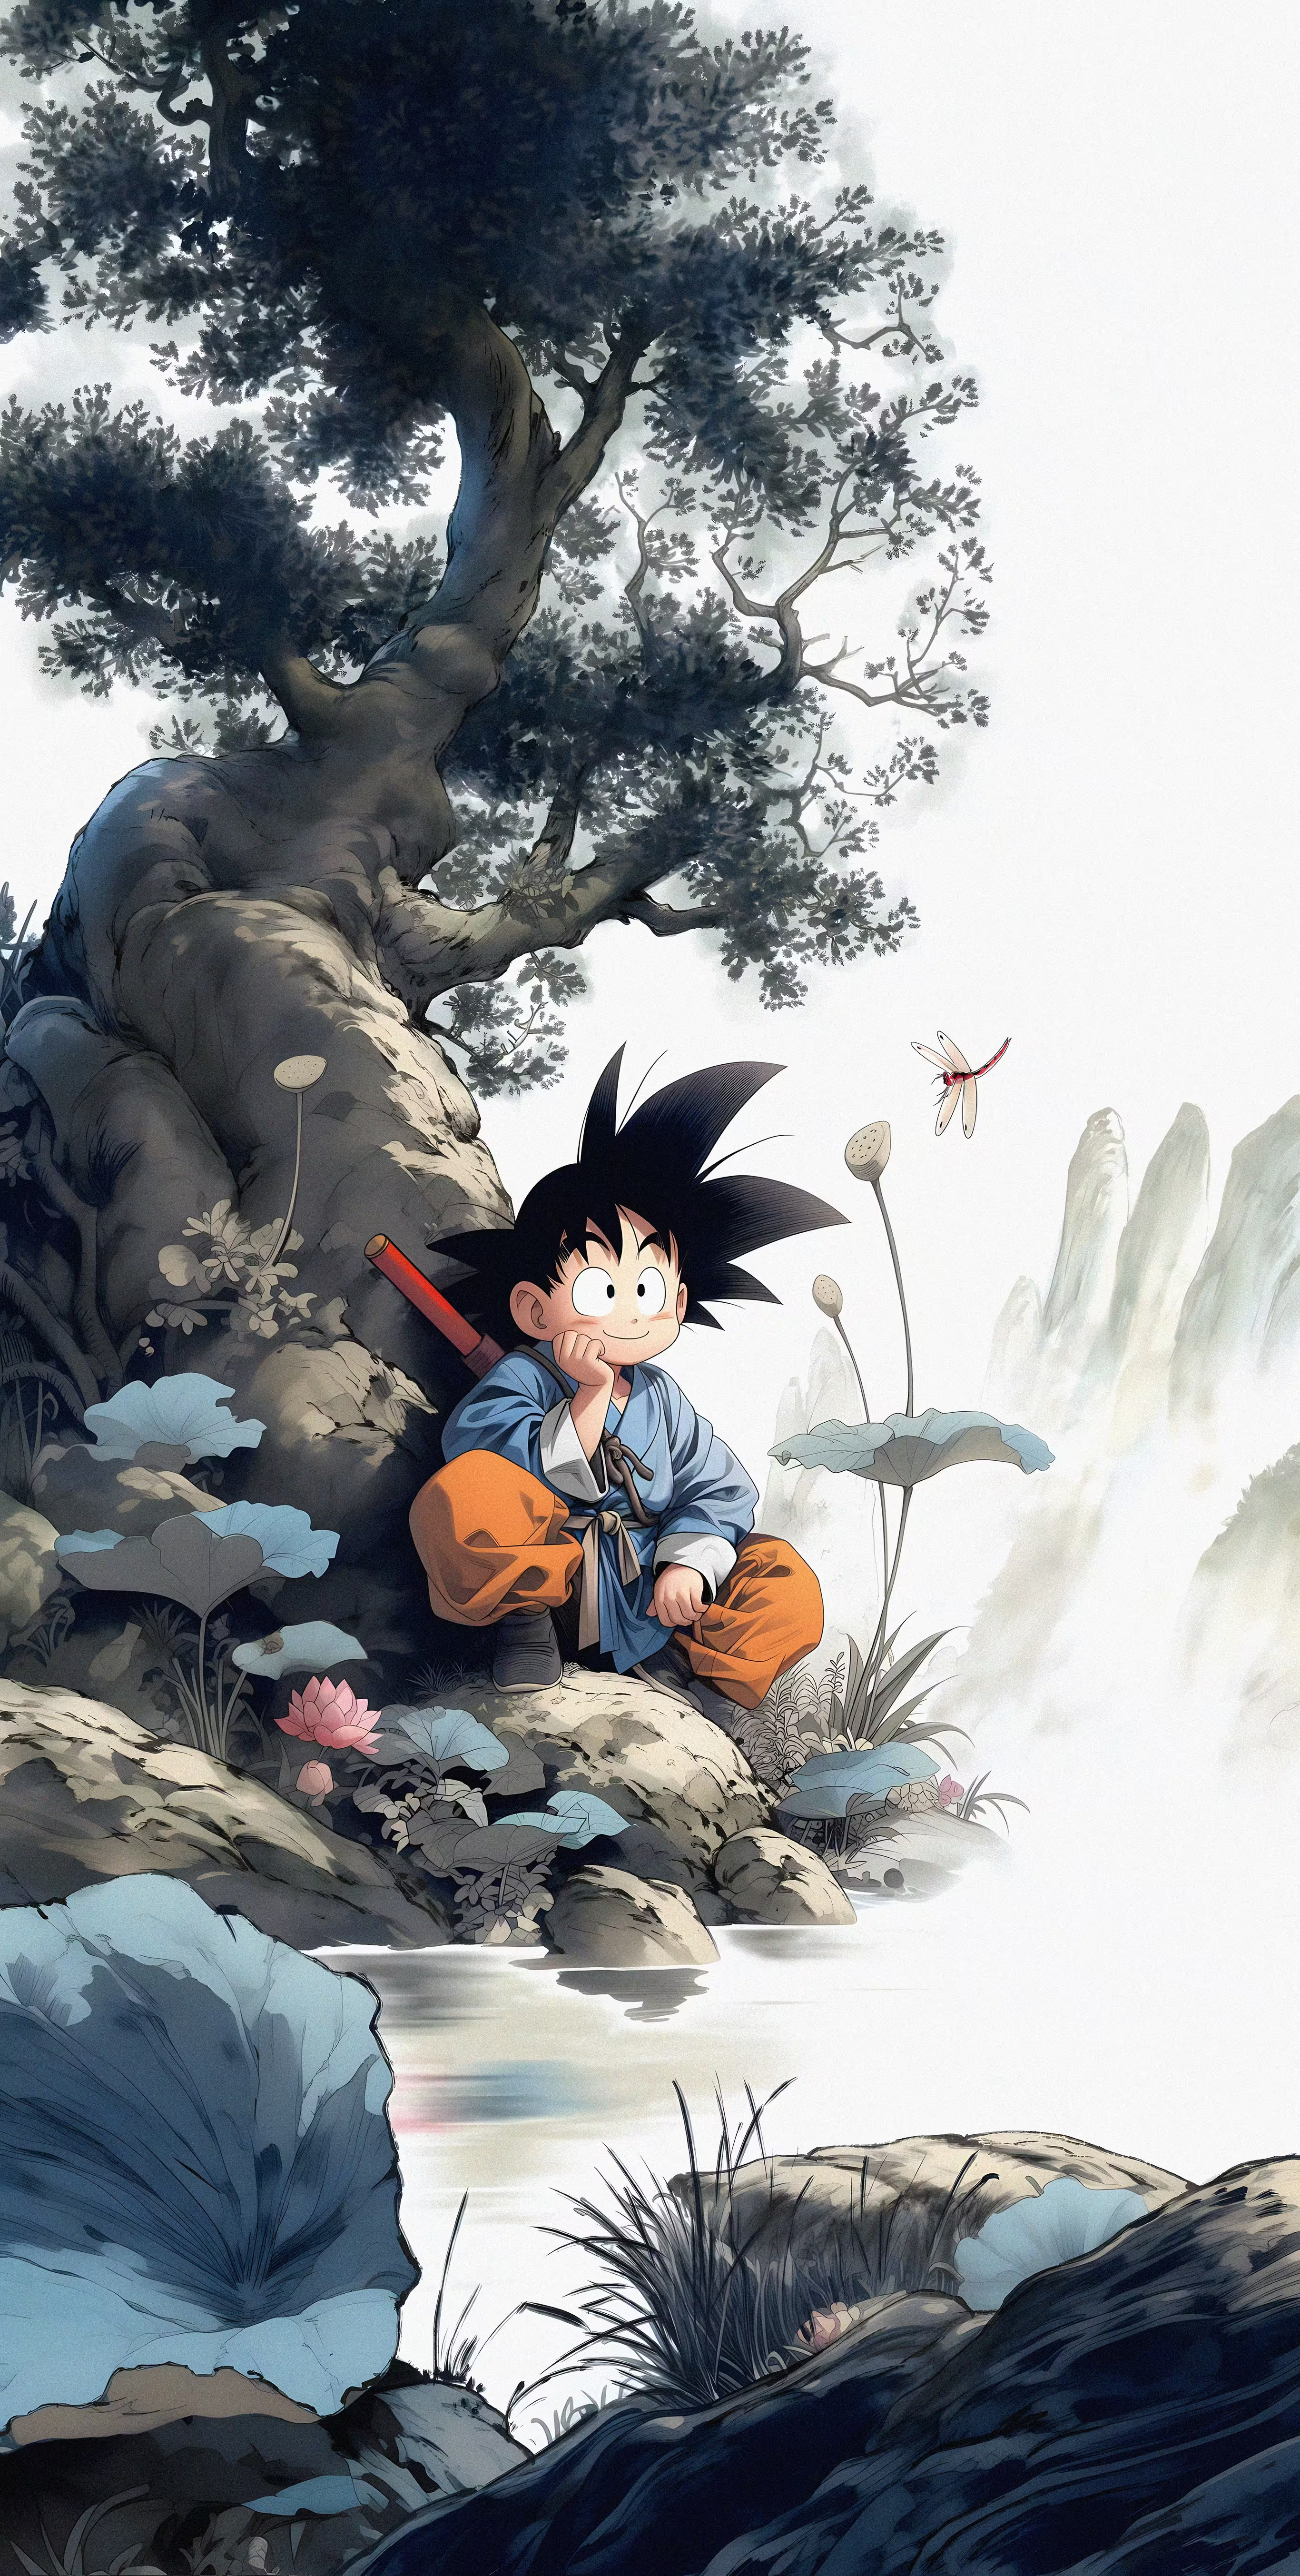 Anime 2732x5412 anime boys Son Goku Dragon Ball outdoors nature dragonflies trees smiling